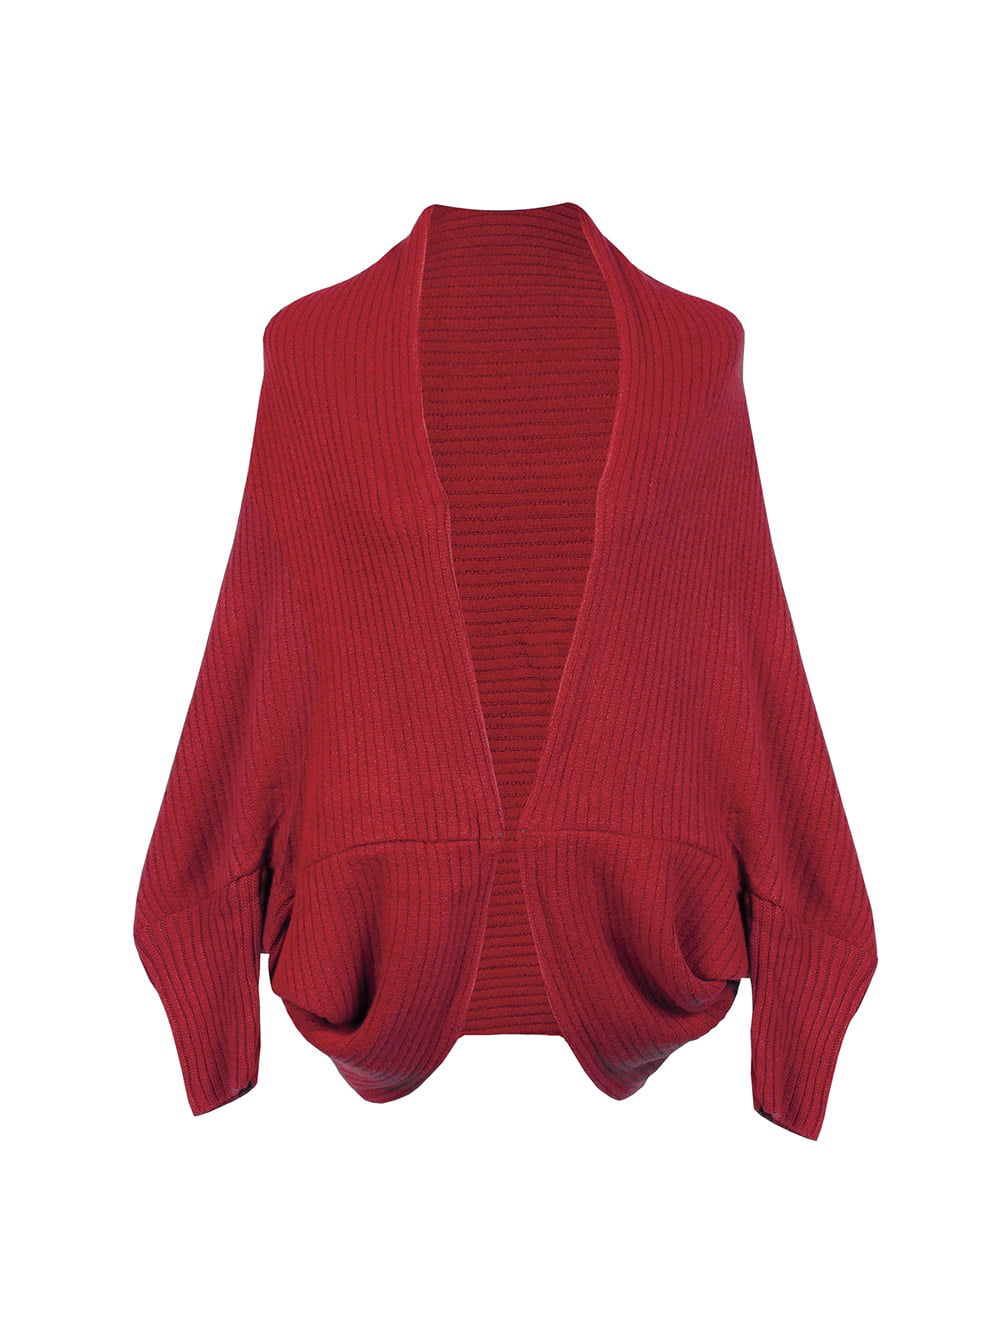 Red Angora Sweater Medium Very cozy and soft